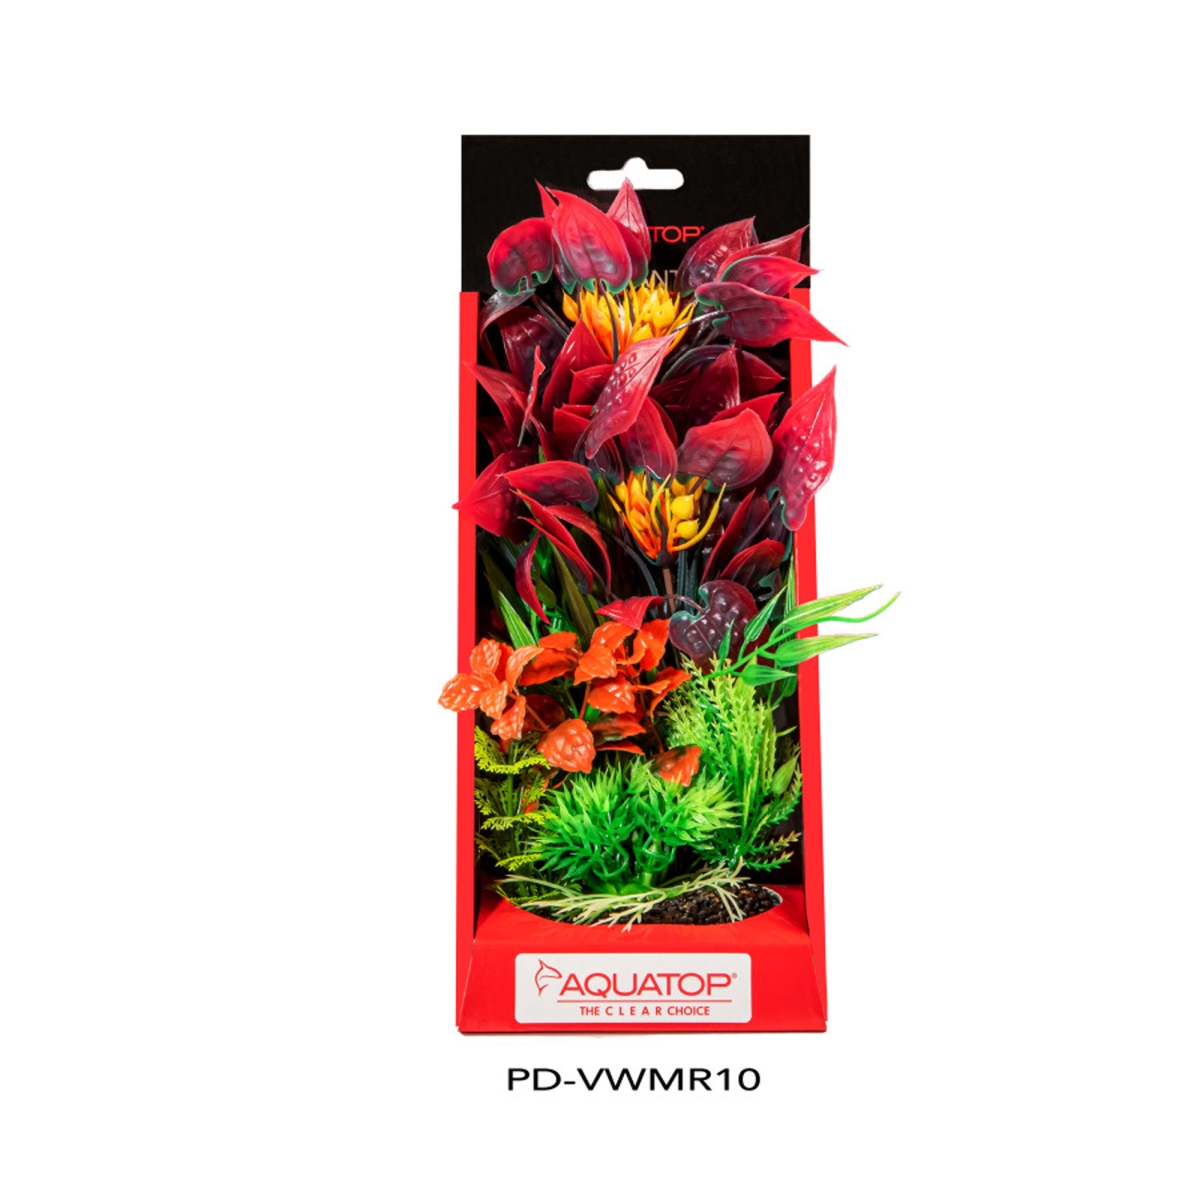 Picture of Aquatop 810074880473 10 in. Aquatop Vibrant Wild Plant Mixed, Red